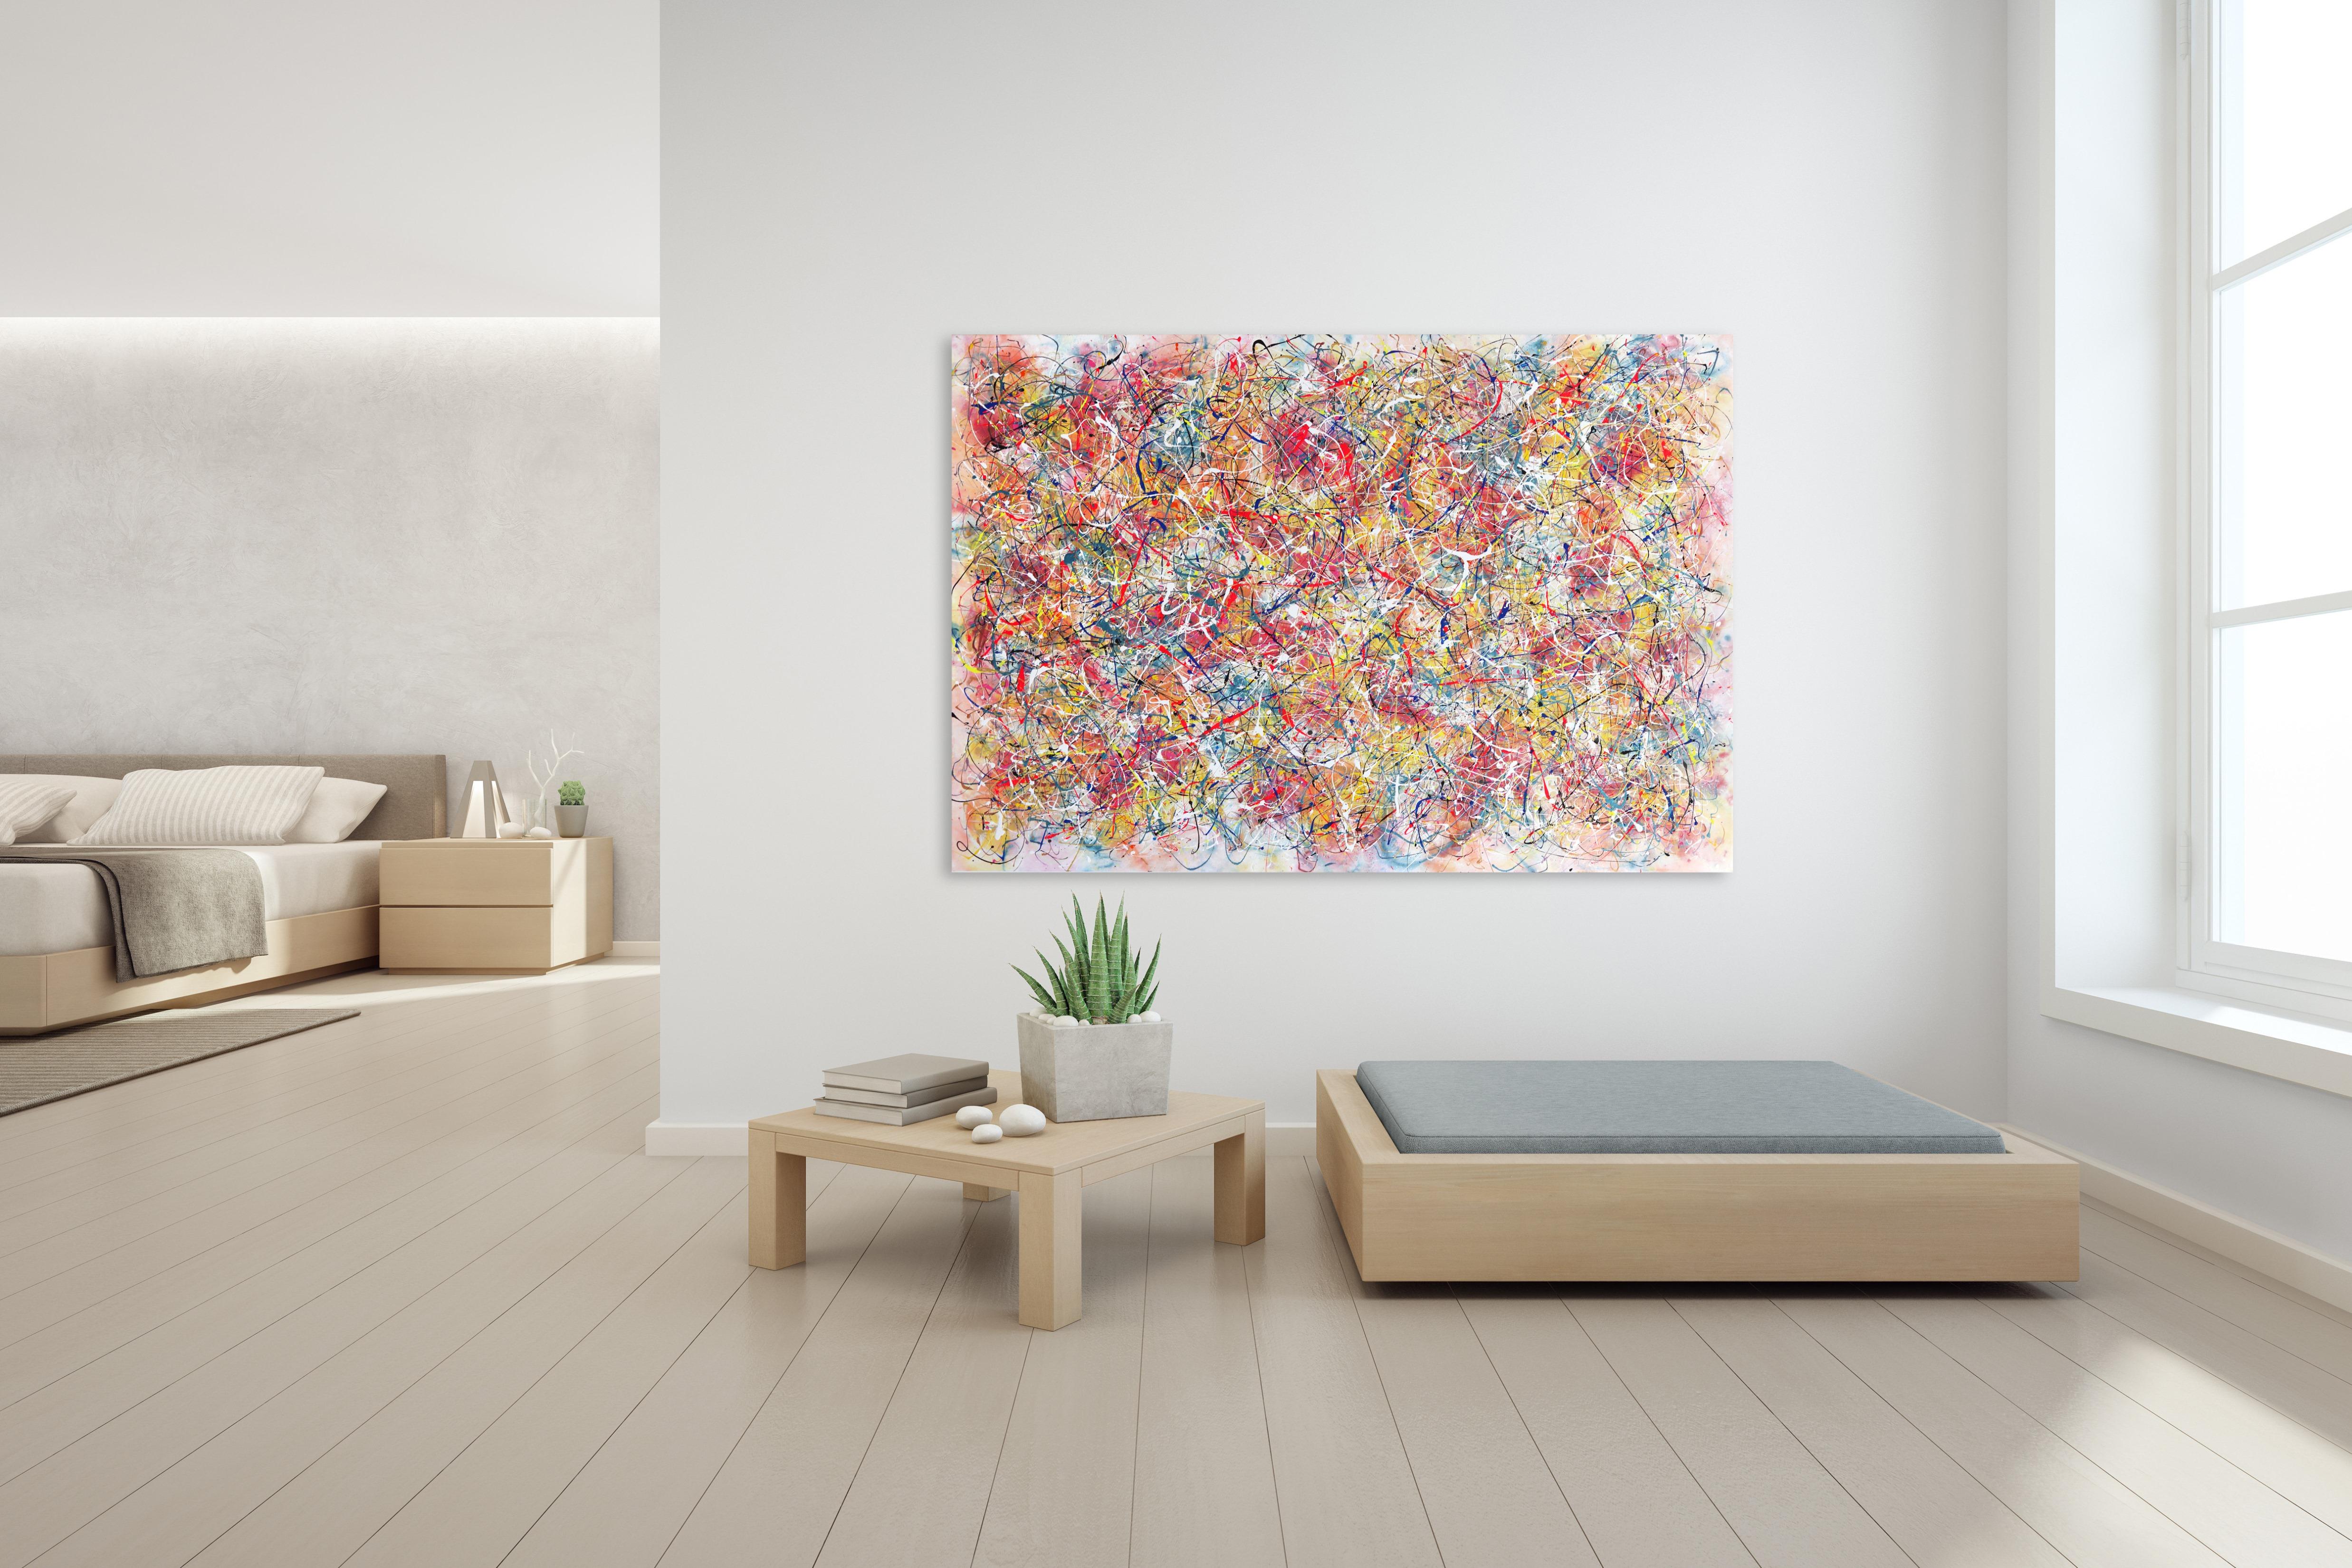 Joyful Noise - Large Colorful Unique Expressionist Action Painting For Sale 4